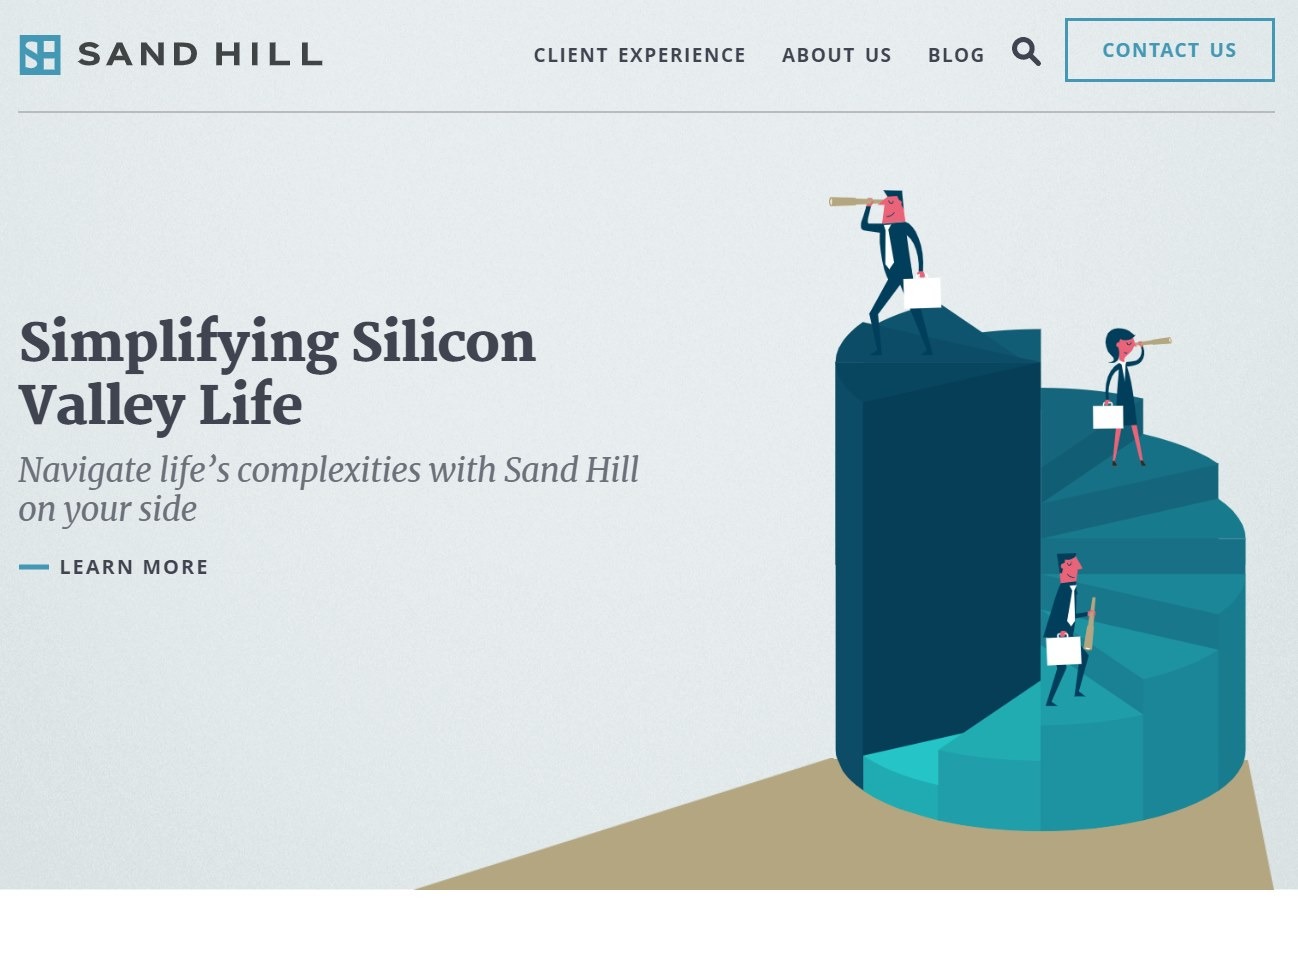 Sand Hill Global Advisors